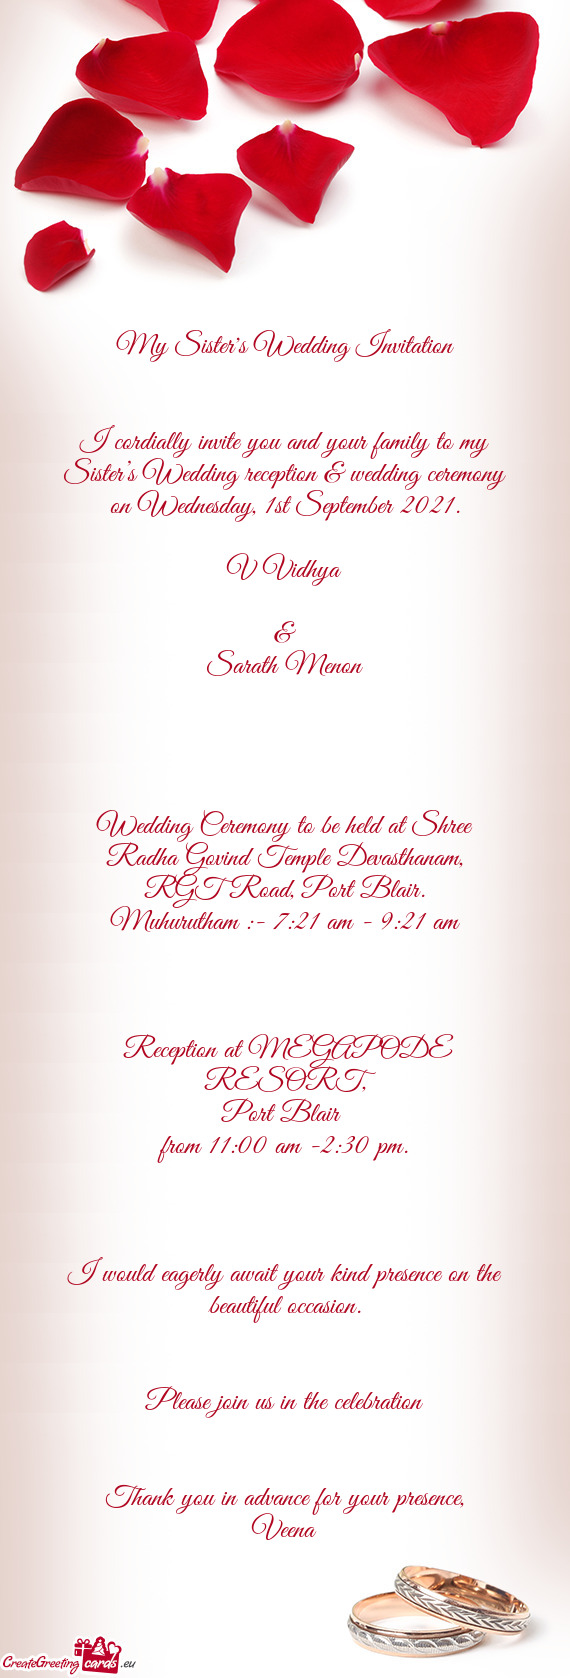 Wedding Ceremony to be held at Shree Radha Govind Temple Devasthanam, RGT Road, Port Blair